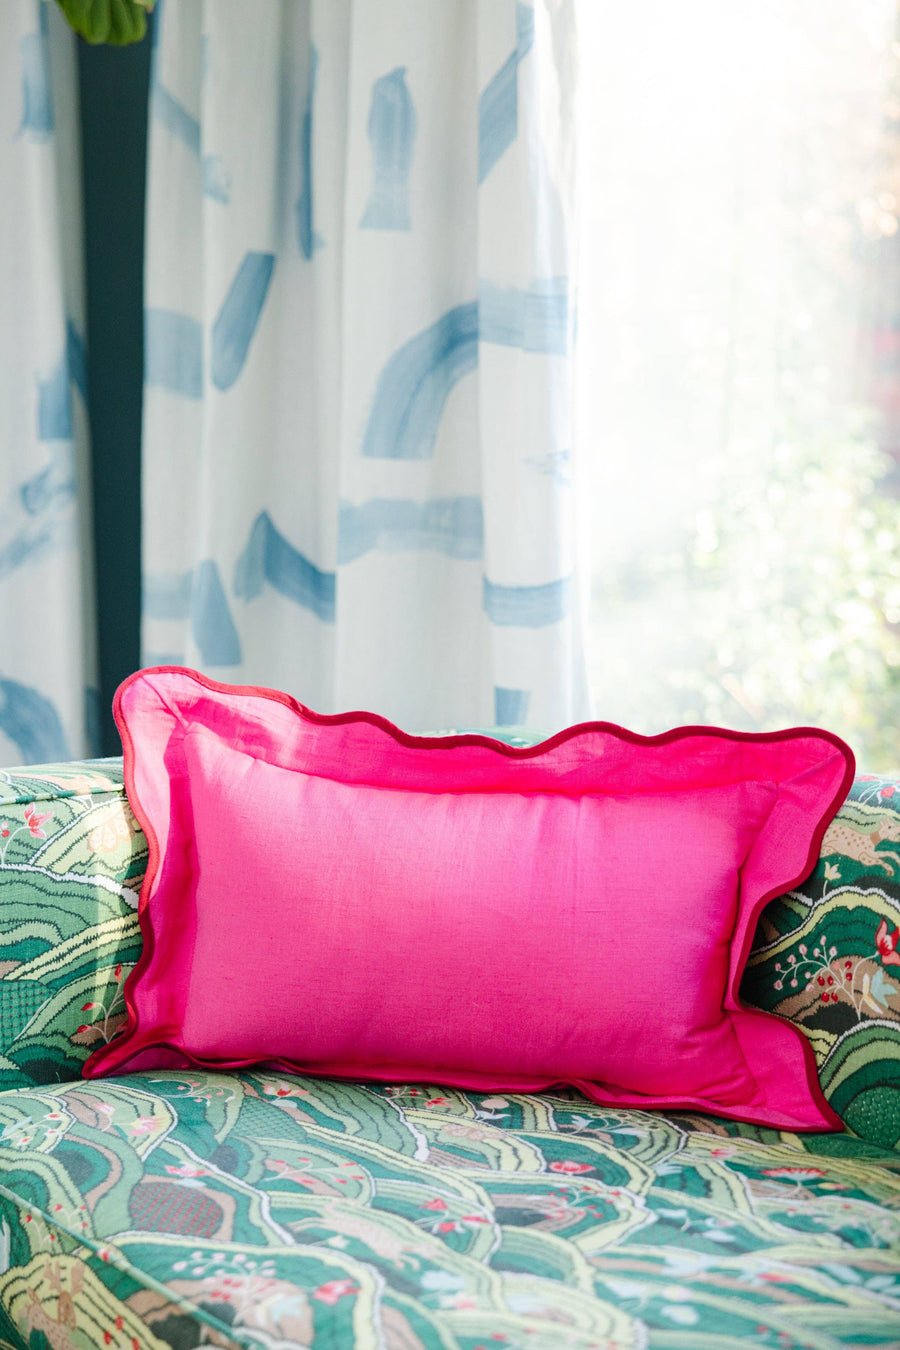 Darcy Linen Lumbar Pillow - Neon Pink + Wine